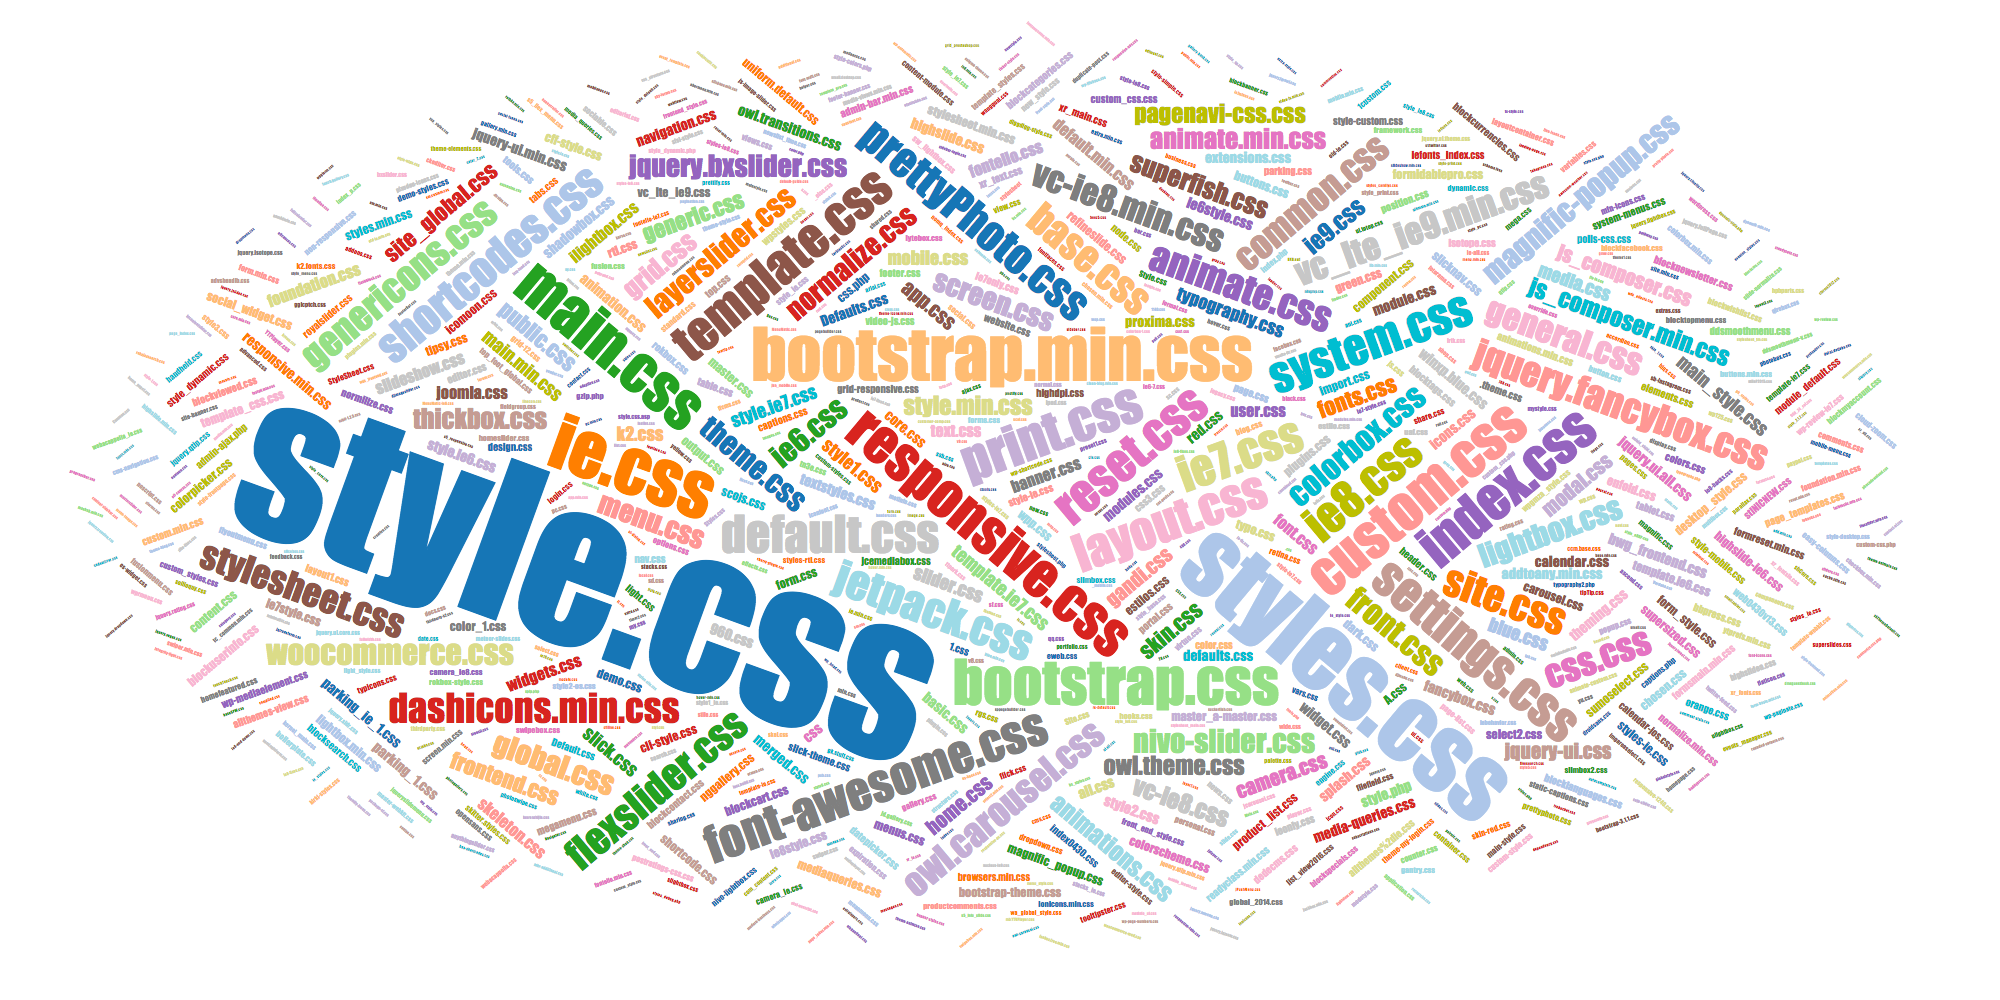 Popular names of CSS files default.css, dashicons.min.css, etc.